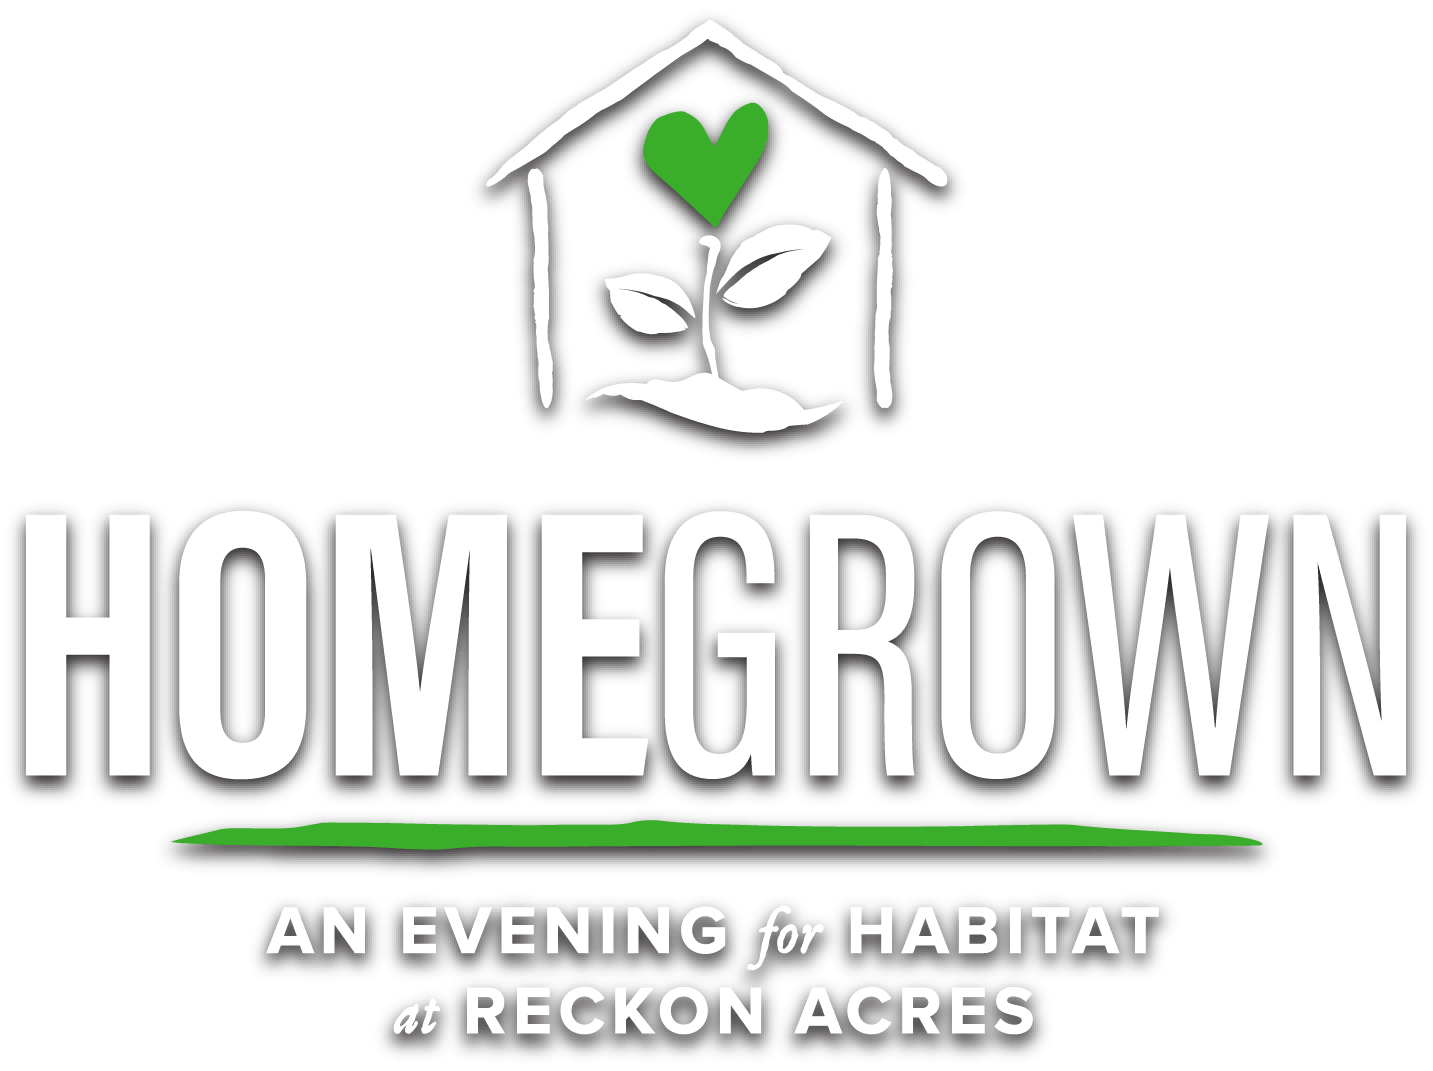 Home Grown event logo